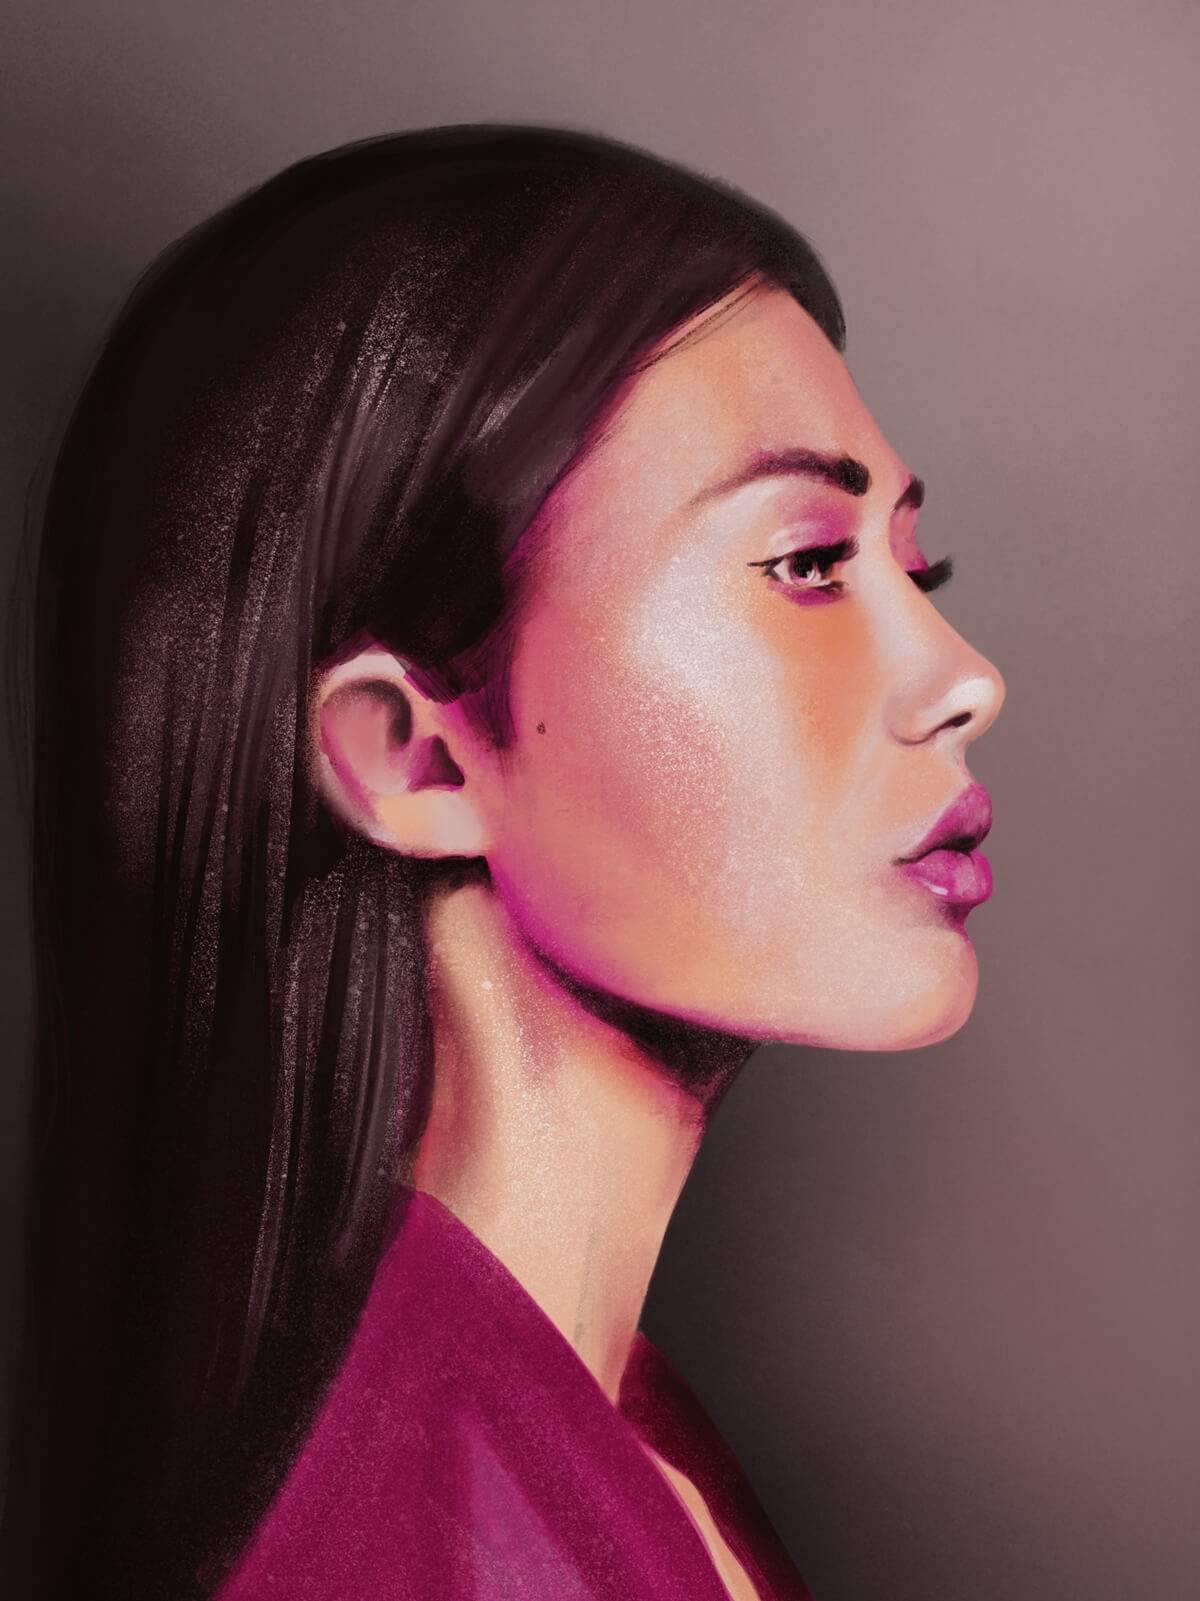 Digital Portrait: Detailed Portrayal of an Asian Woman